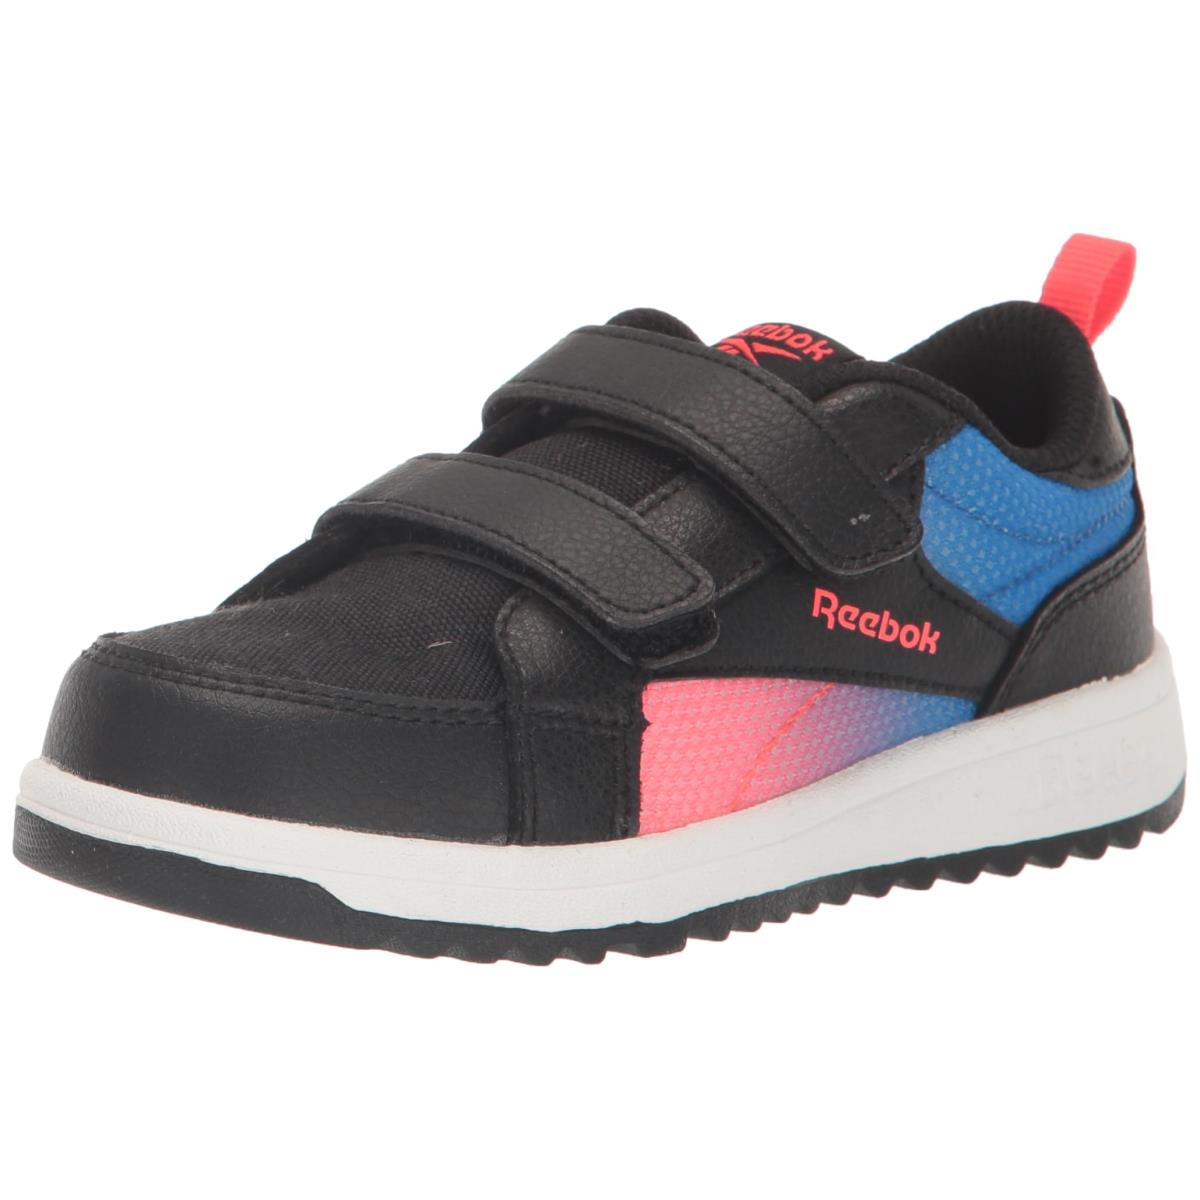 Reebok Unisex-child Weebok Clasp Low Sneaker Cobalt/Black/Neon Cherry